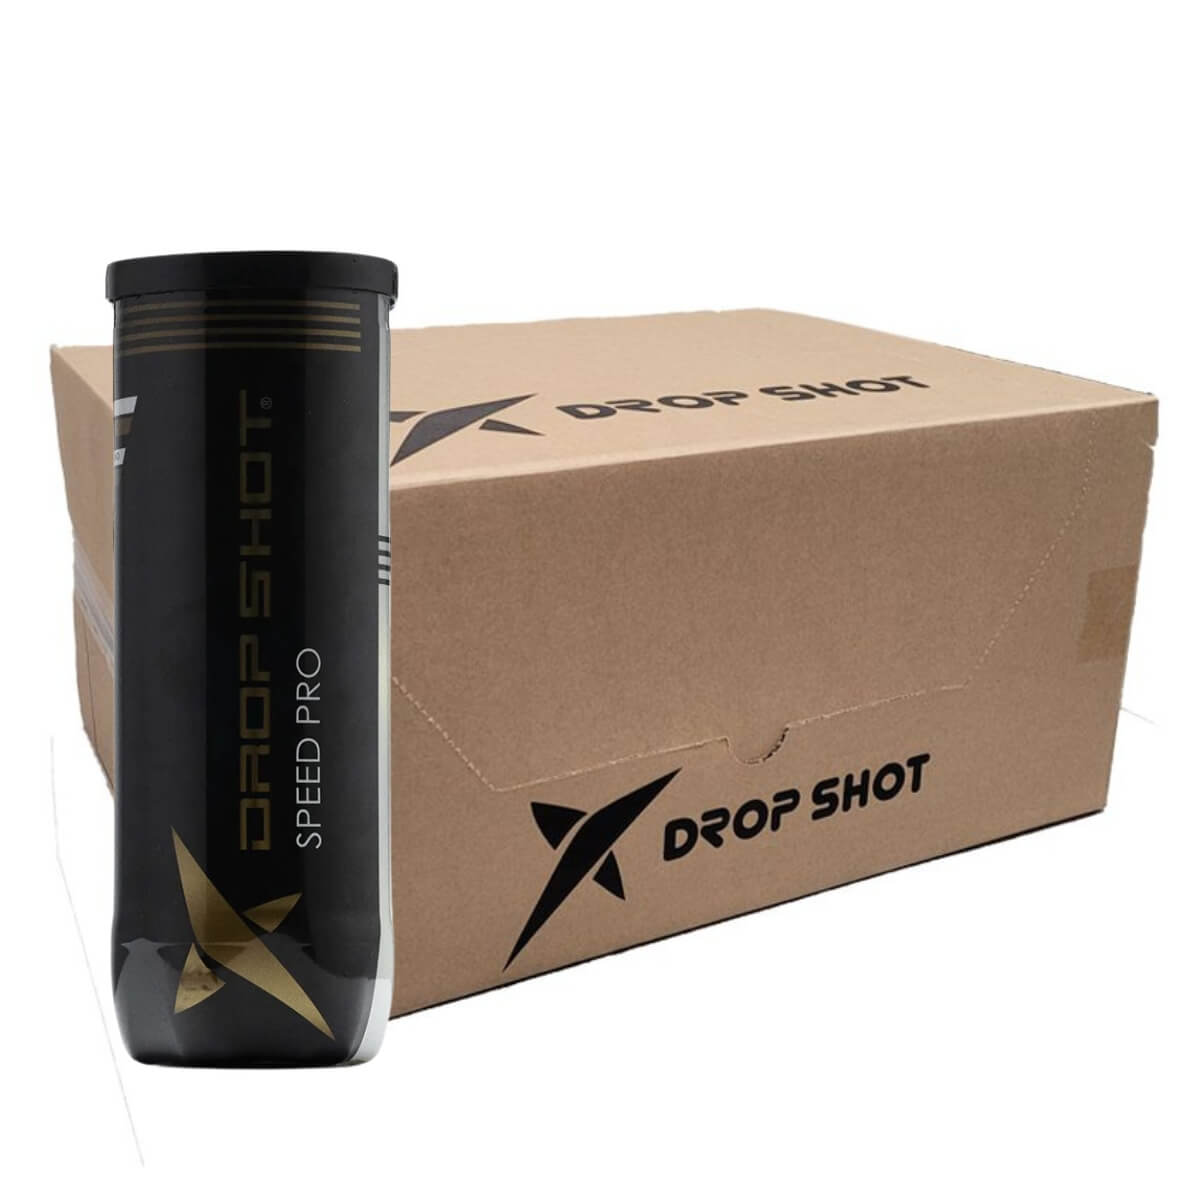 Drop Shot Tournament Speed Pro balls box